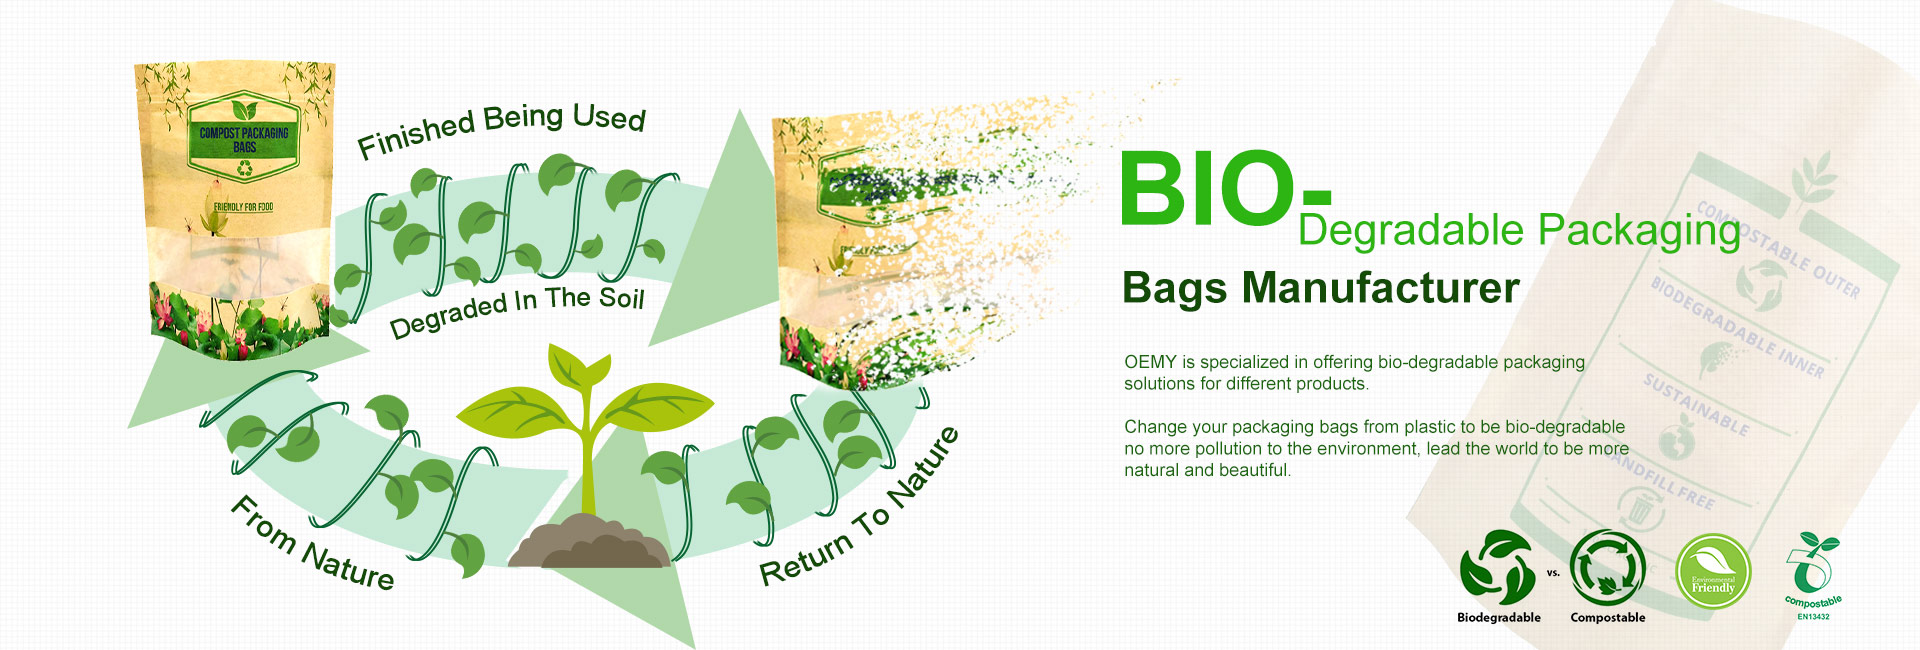 Bio-Degradable Packaging 